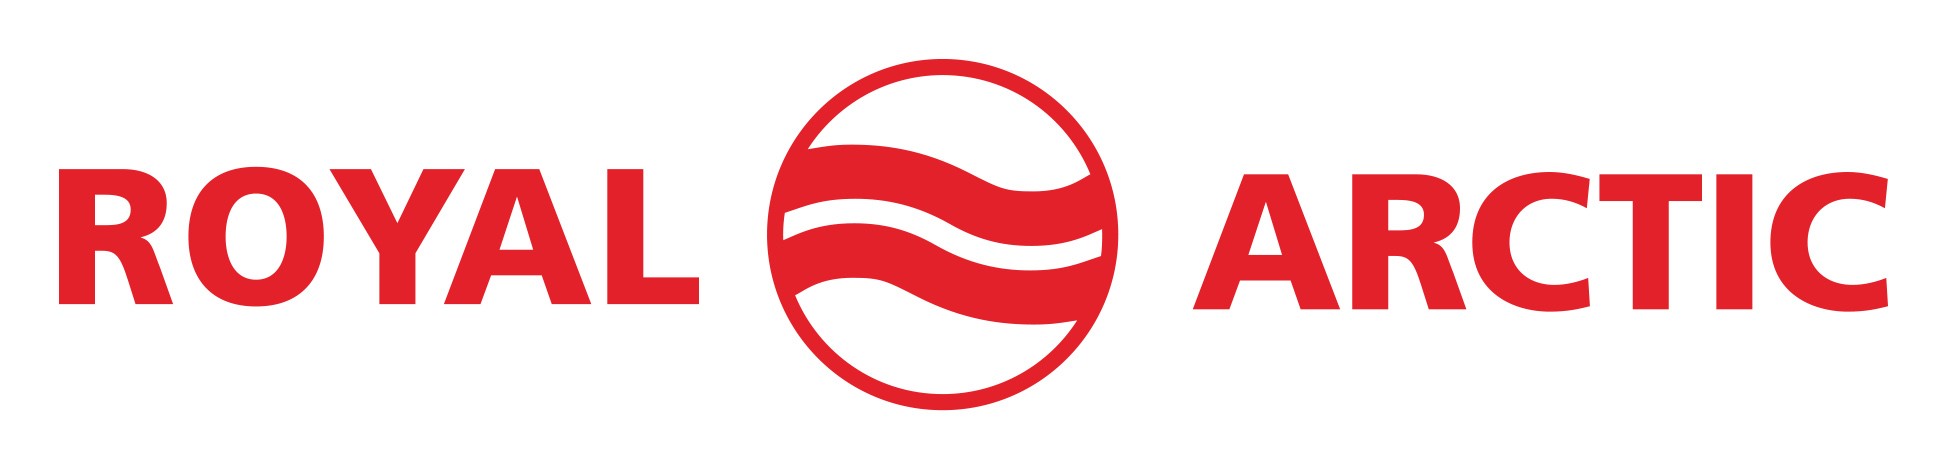 Royal Arctic shipping company logo